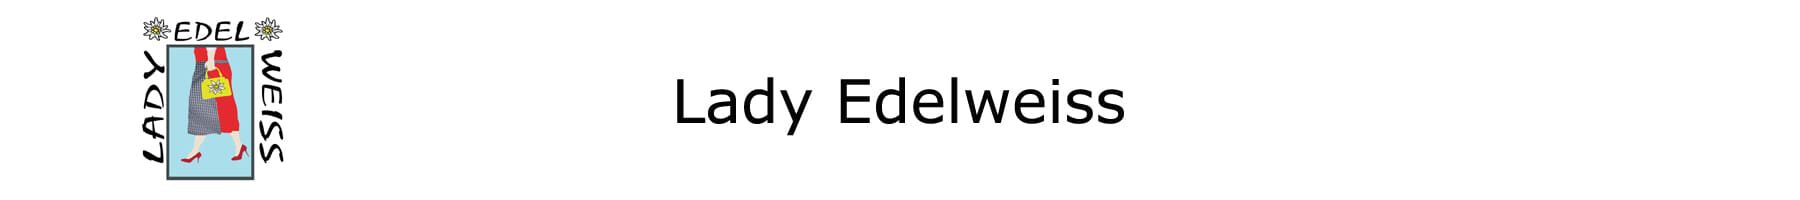 Lady Edelweiss